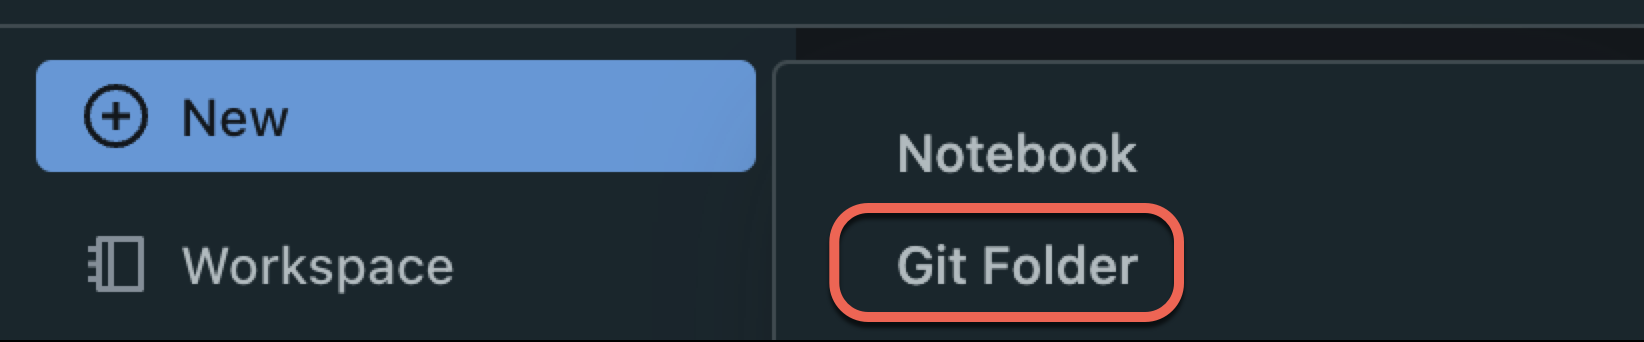 The "New" menu option now asks you to create a "Git folder"